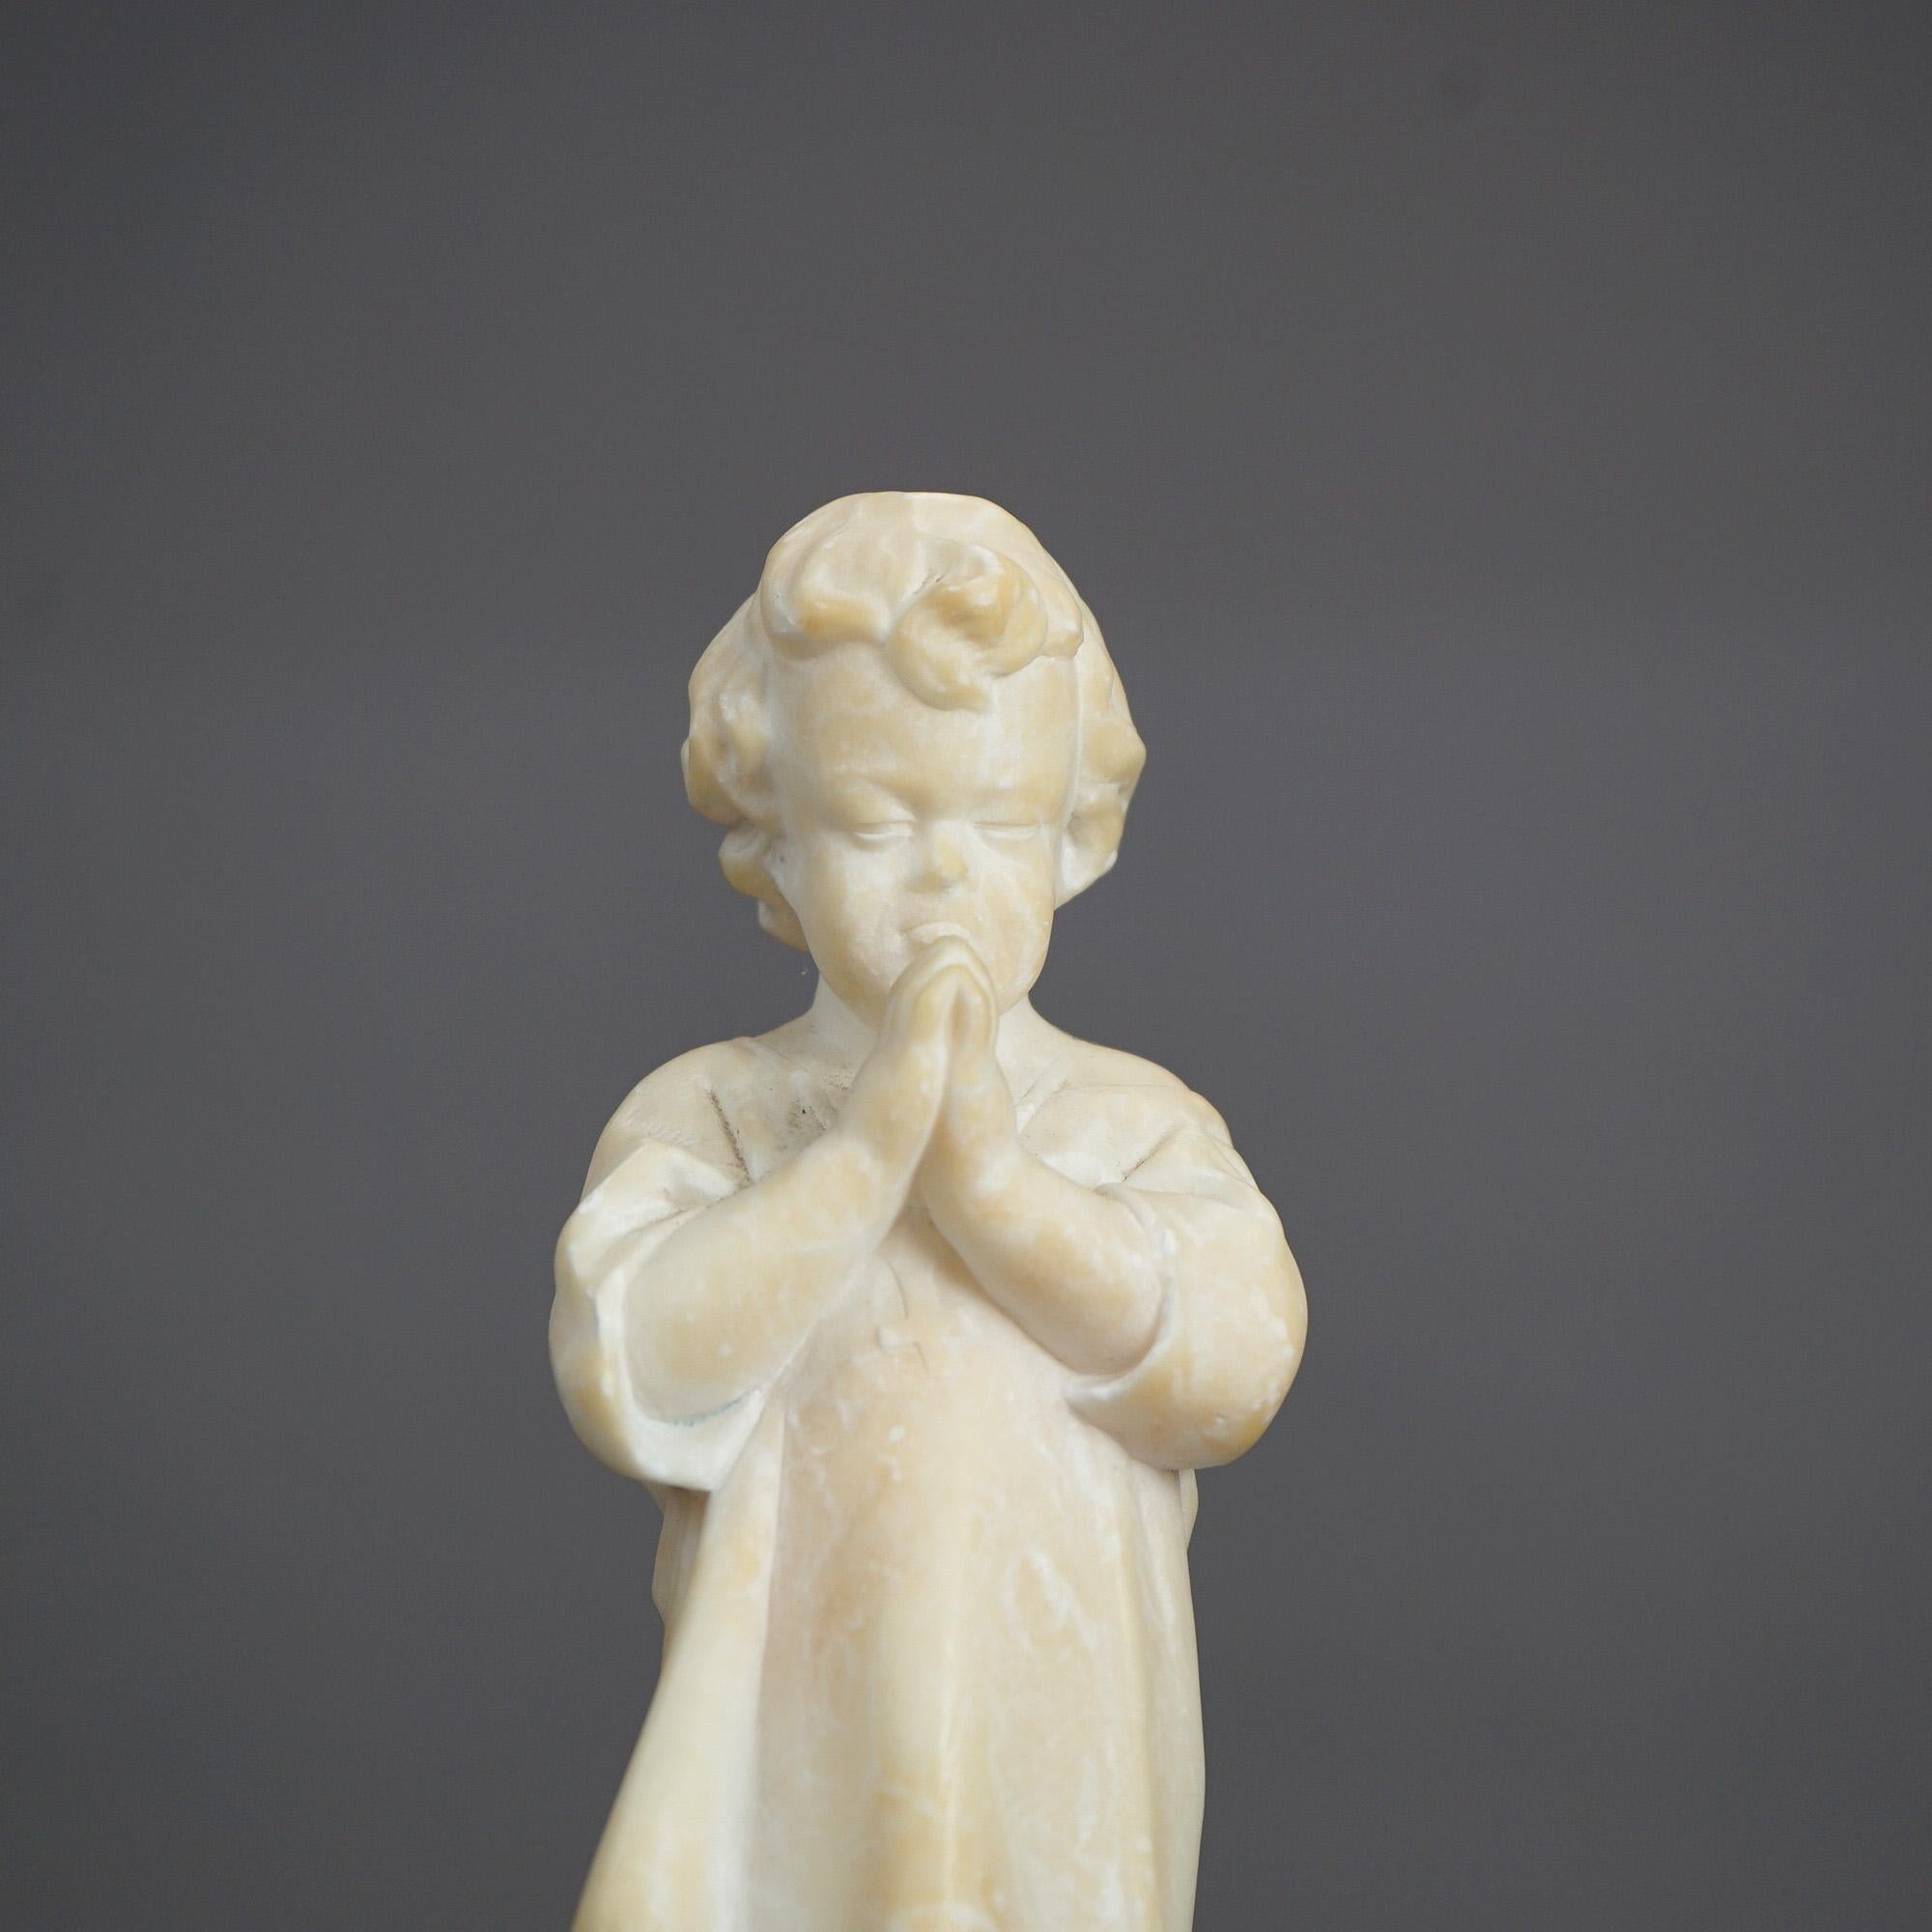 Antique Alabaster Sculpture of a Praying Child & Marble Plinth C1890

Measures- 12.75''H x 4.5''W x 4.5''D